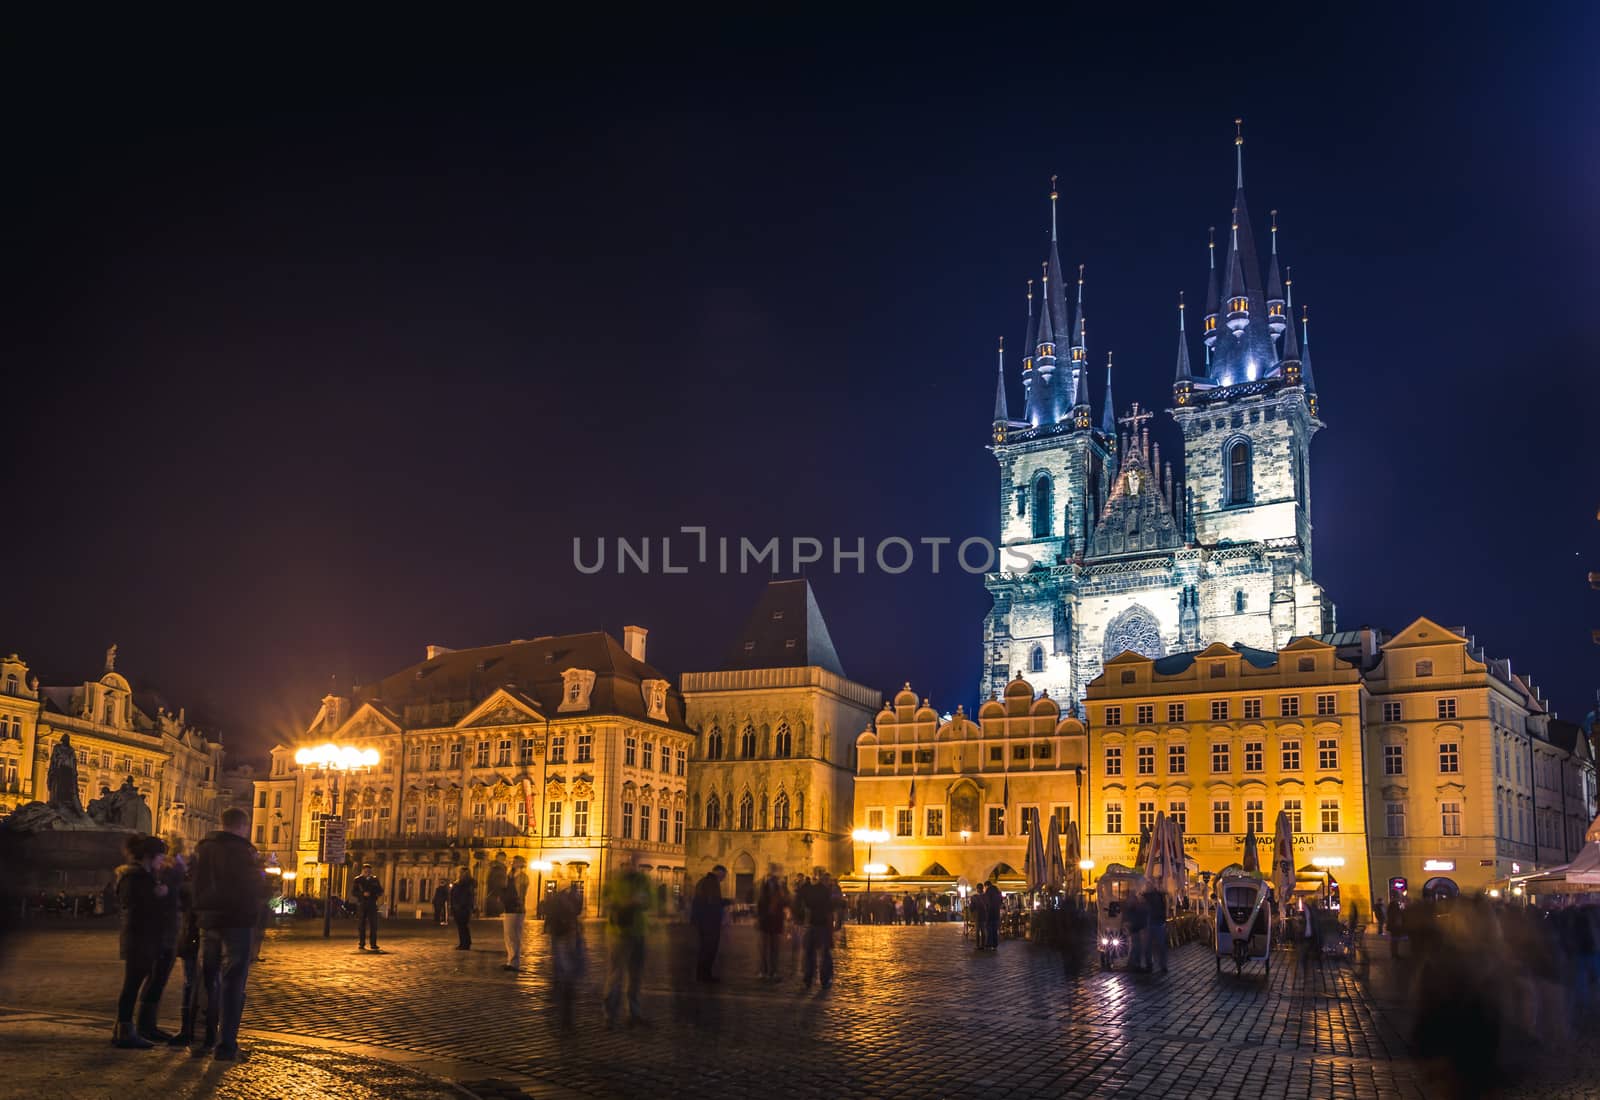 Church of St. Nicholas at Old Town Square in night. Prague, Czechia, czech republic. by petrsvoboda91